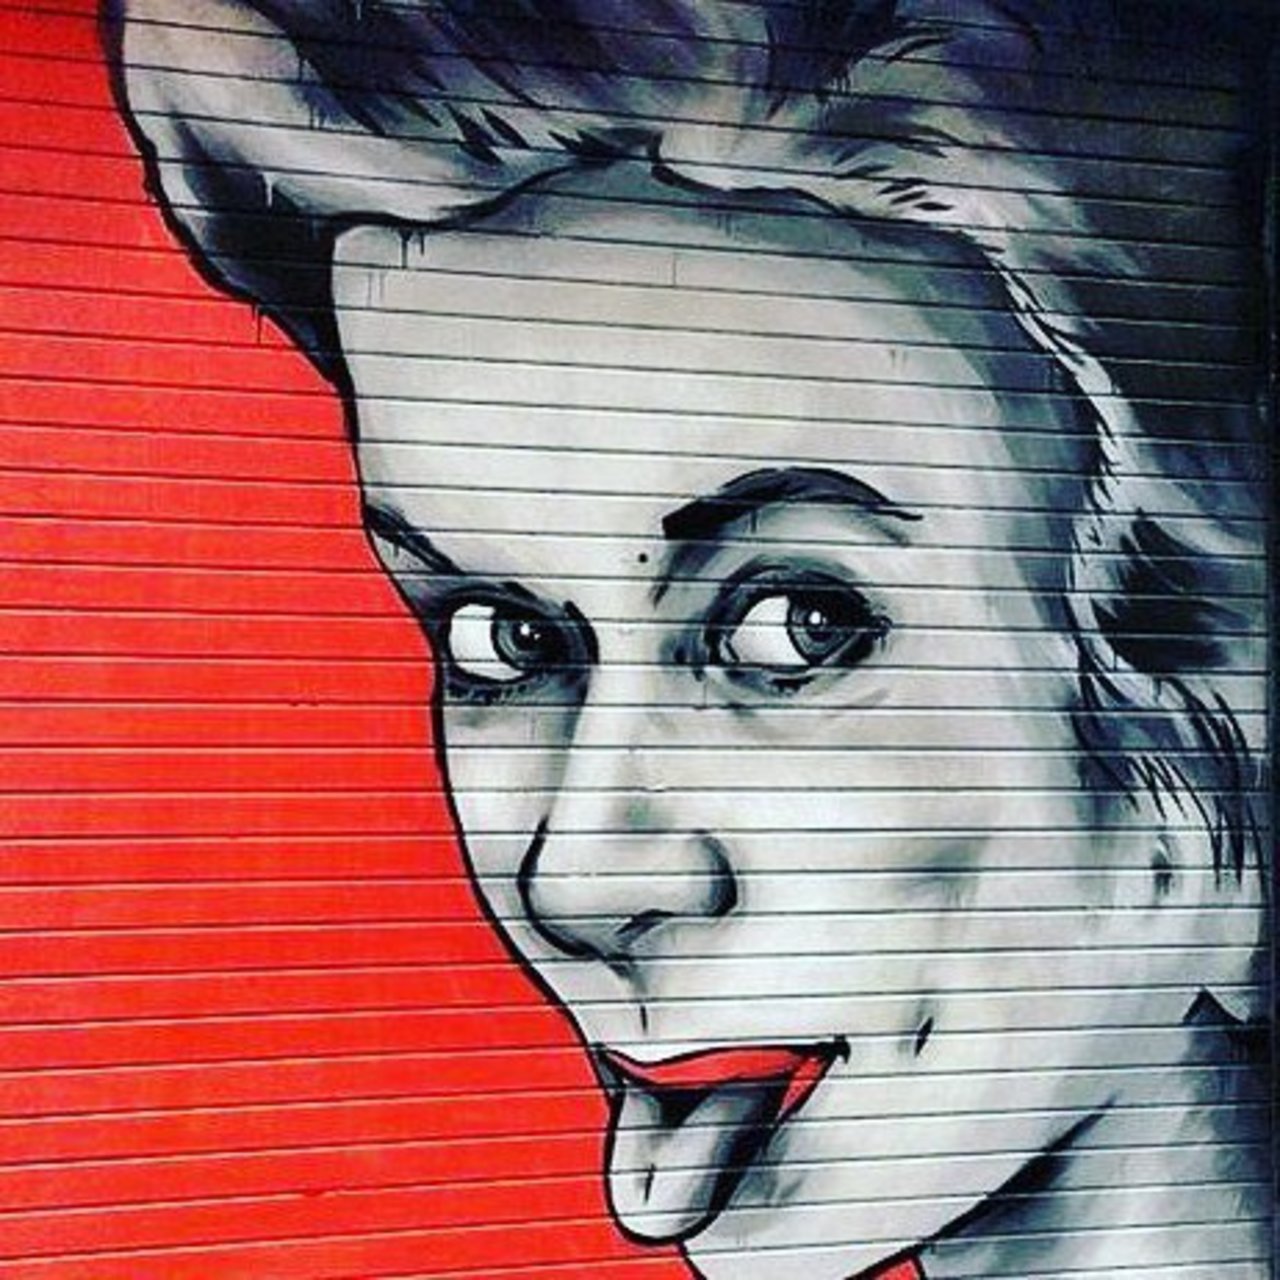 StArtEverywhere: #zabouartist #streetart #art #graffiti #wallart #urbanart #zabou #londonstreetart #paris #streeta… https://t.co/oxktdWU5zG